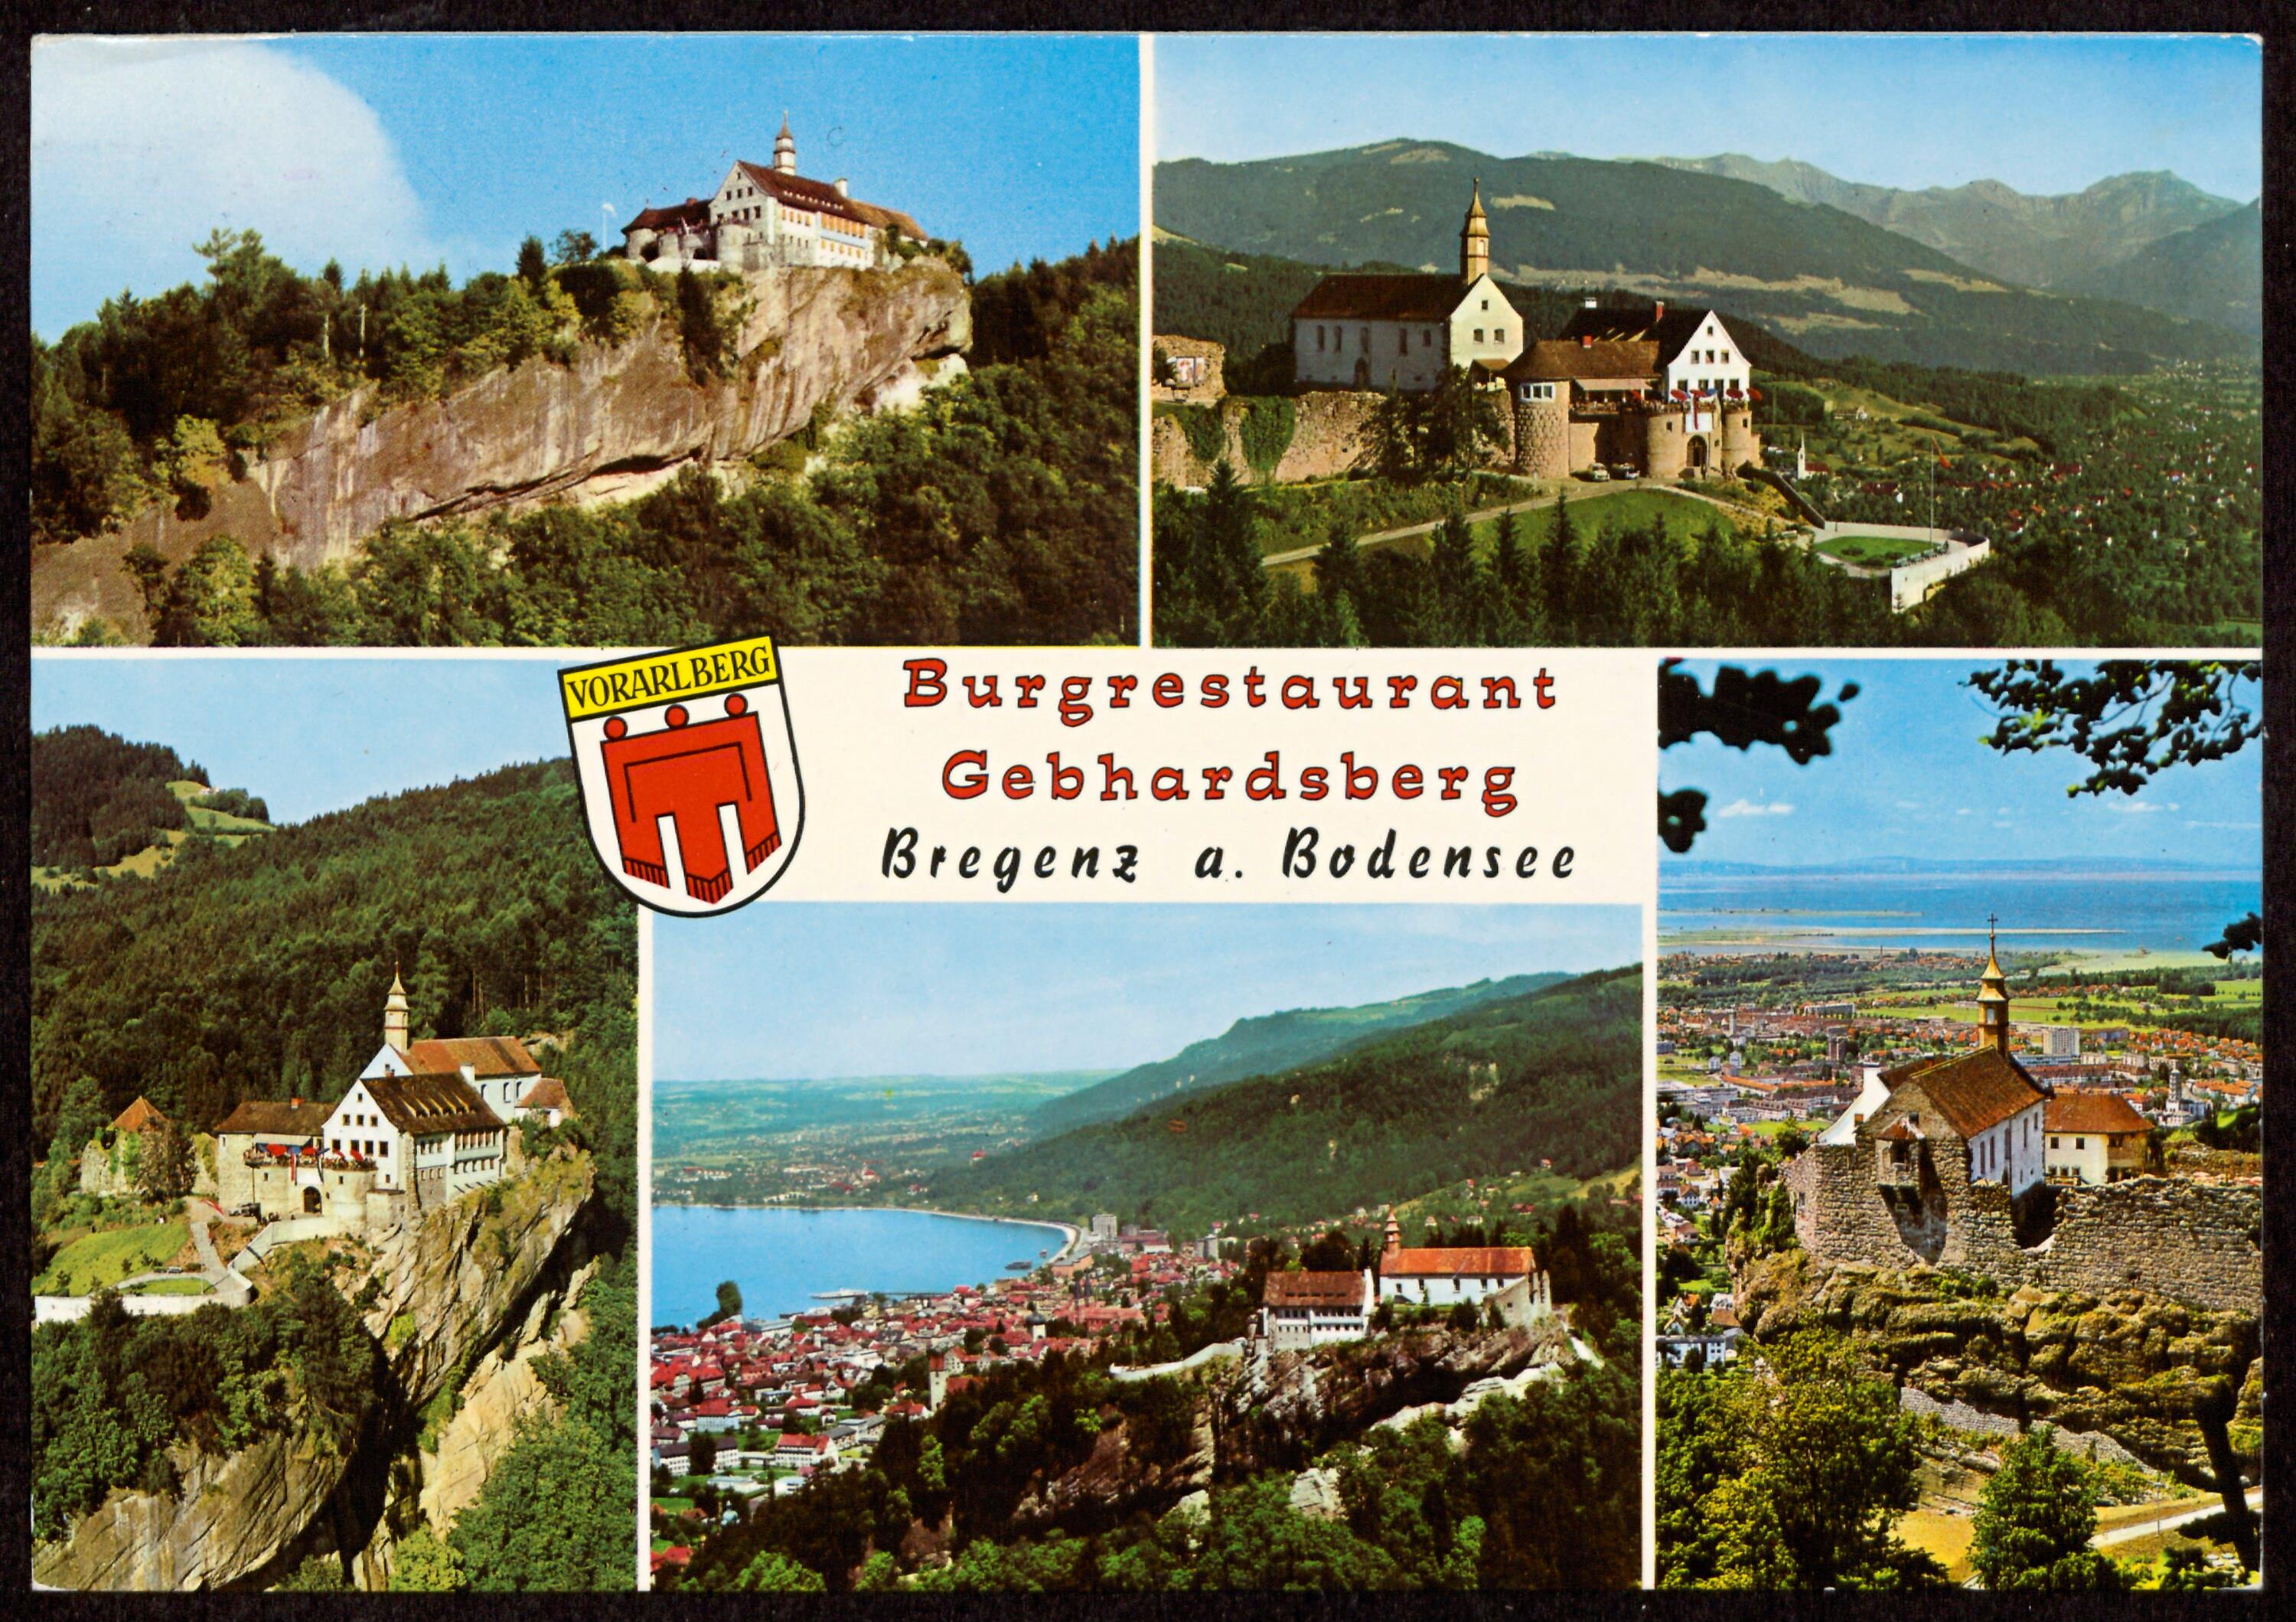 Burgrestaurant Gebhardsberg></div>


    <hr>
    <div class=